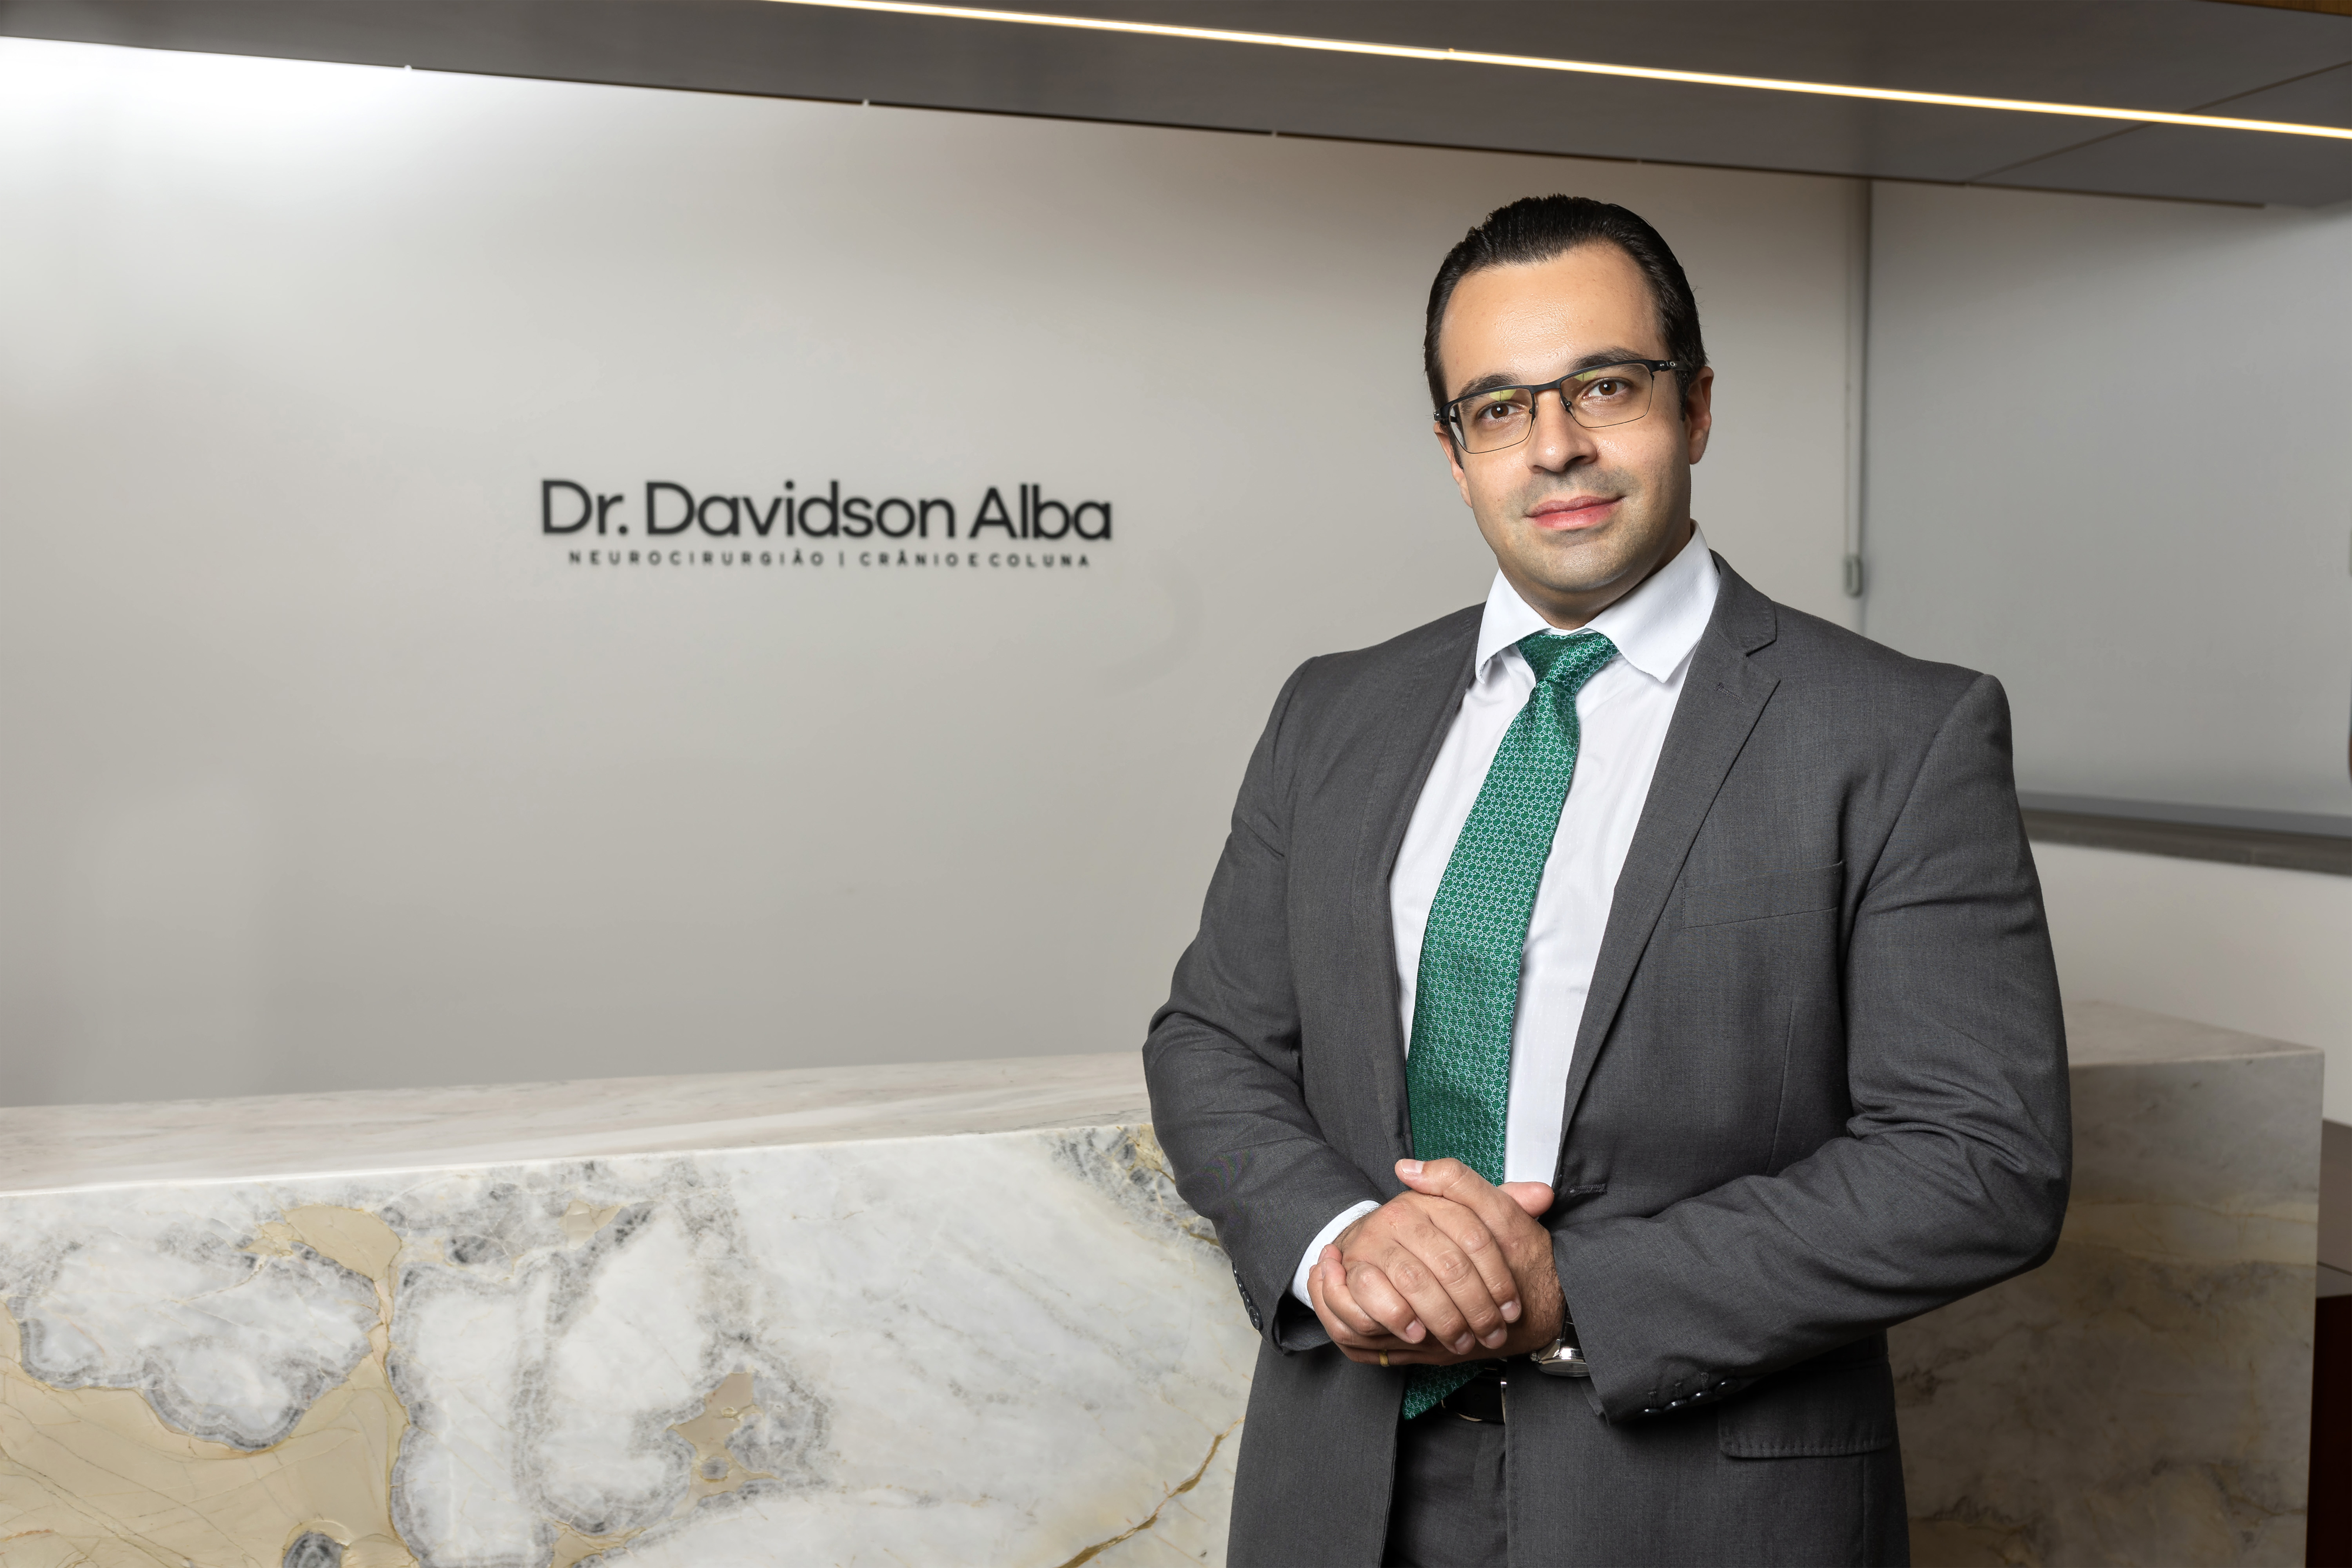 Dr. Davidson Alba